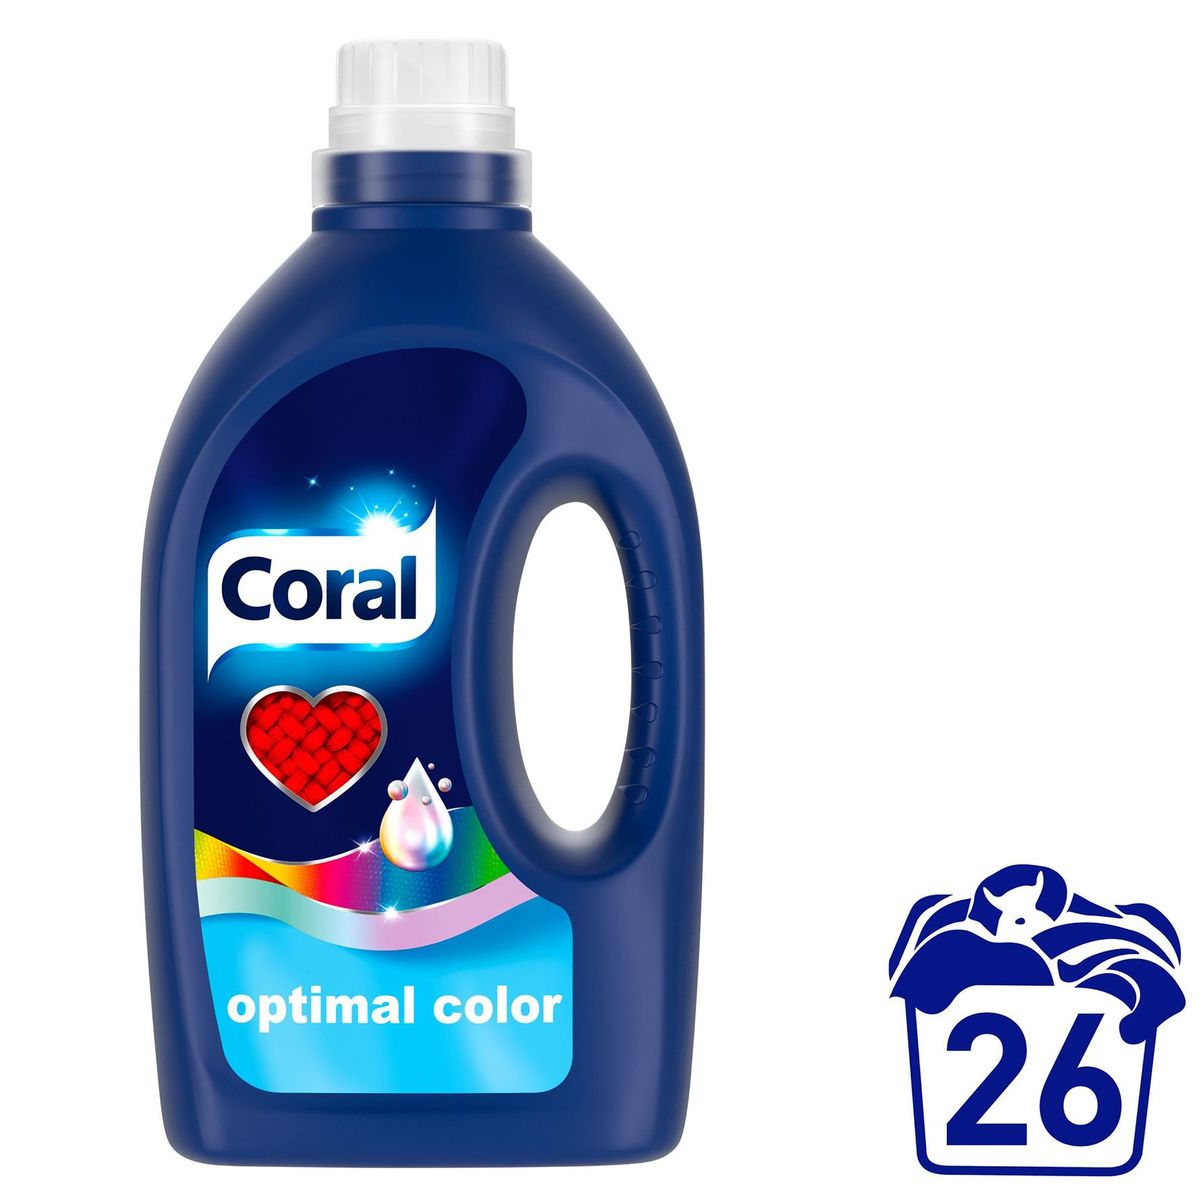 Coral  Vloeibaar Wasmiddel  Optimal Color  26 wasbeurten